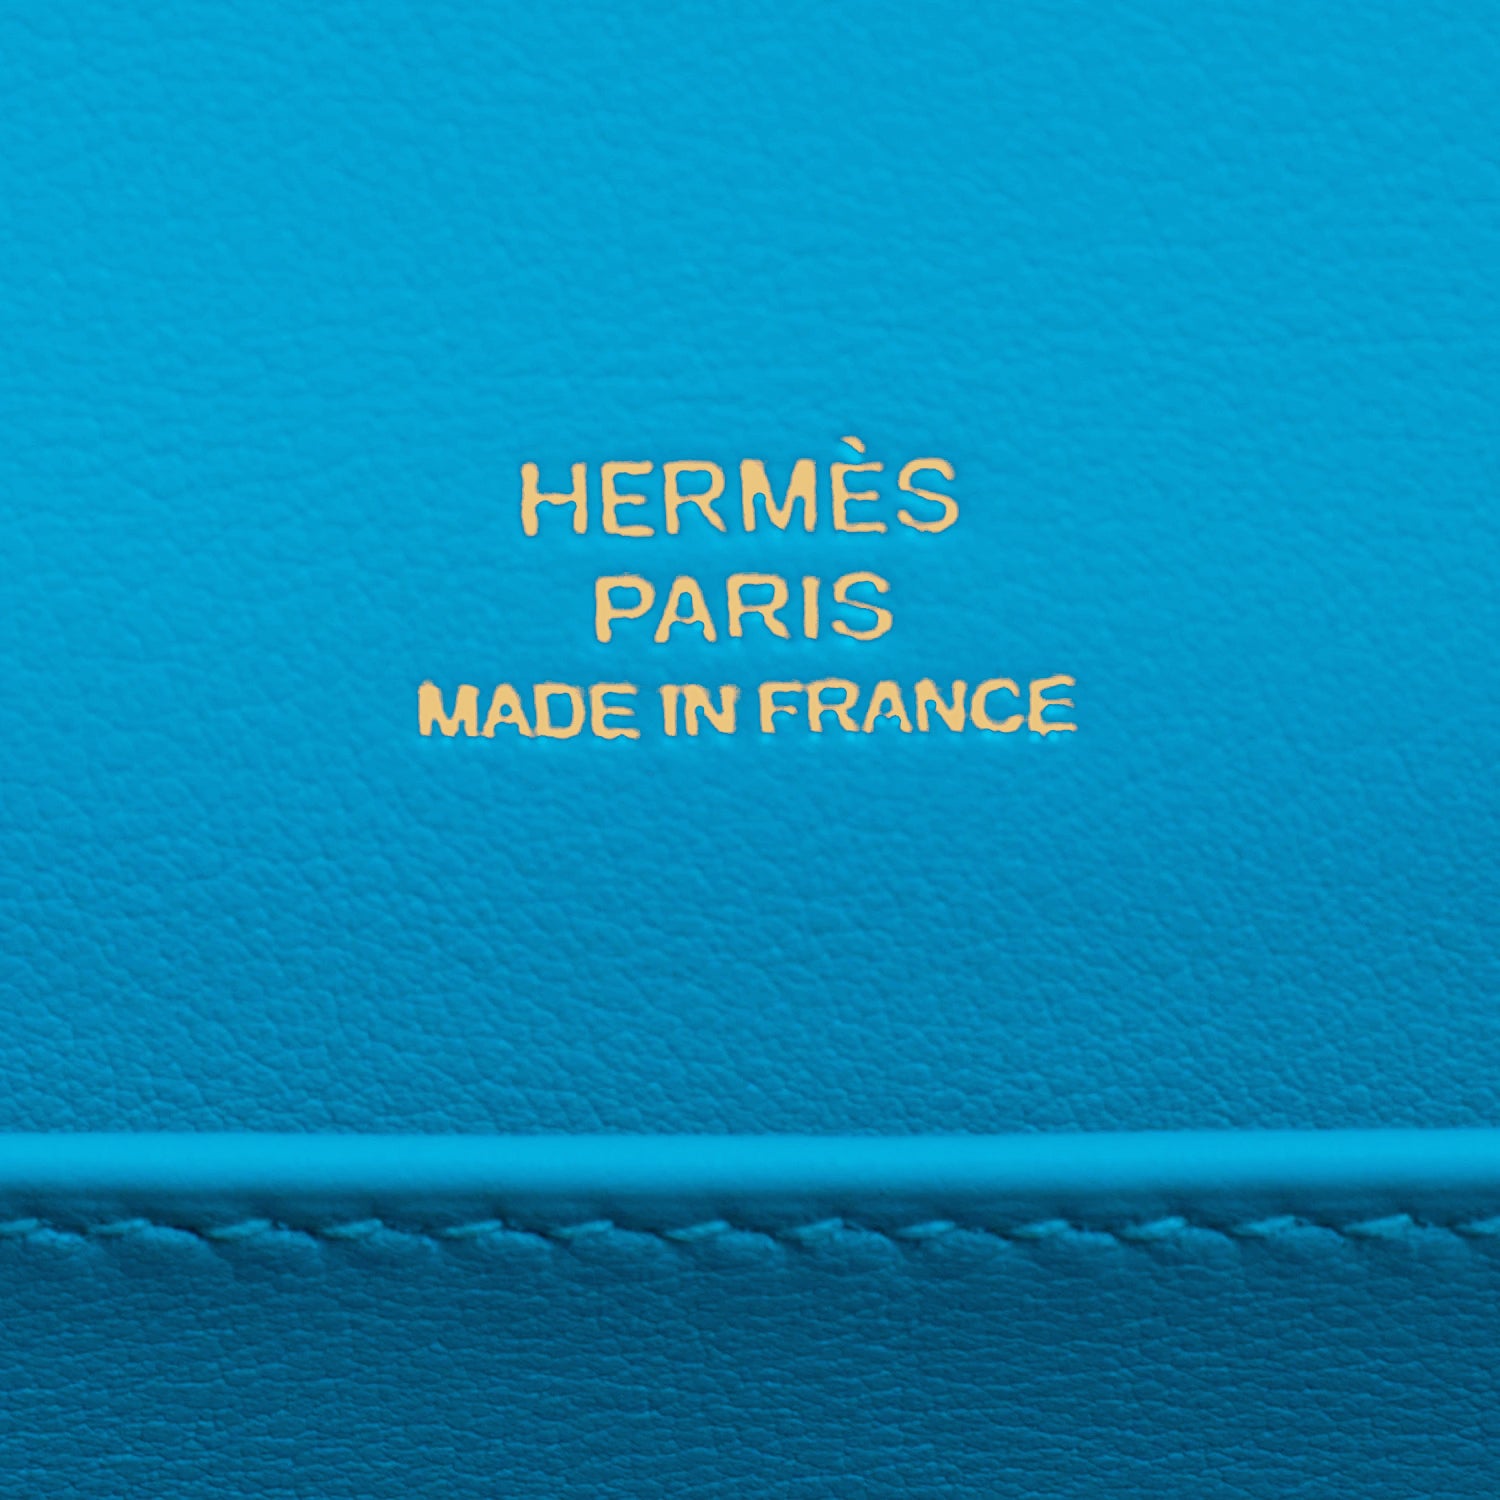 Hermès Kelly Pochette Bleu du Nord Swift Gold Hardware GHW — The